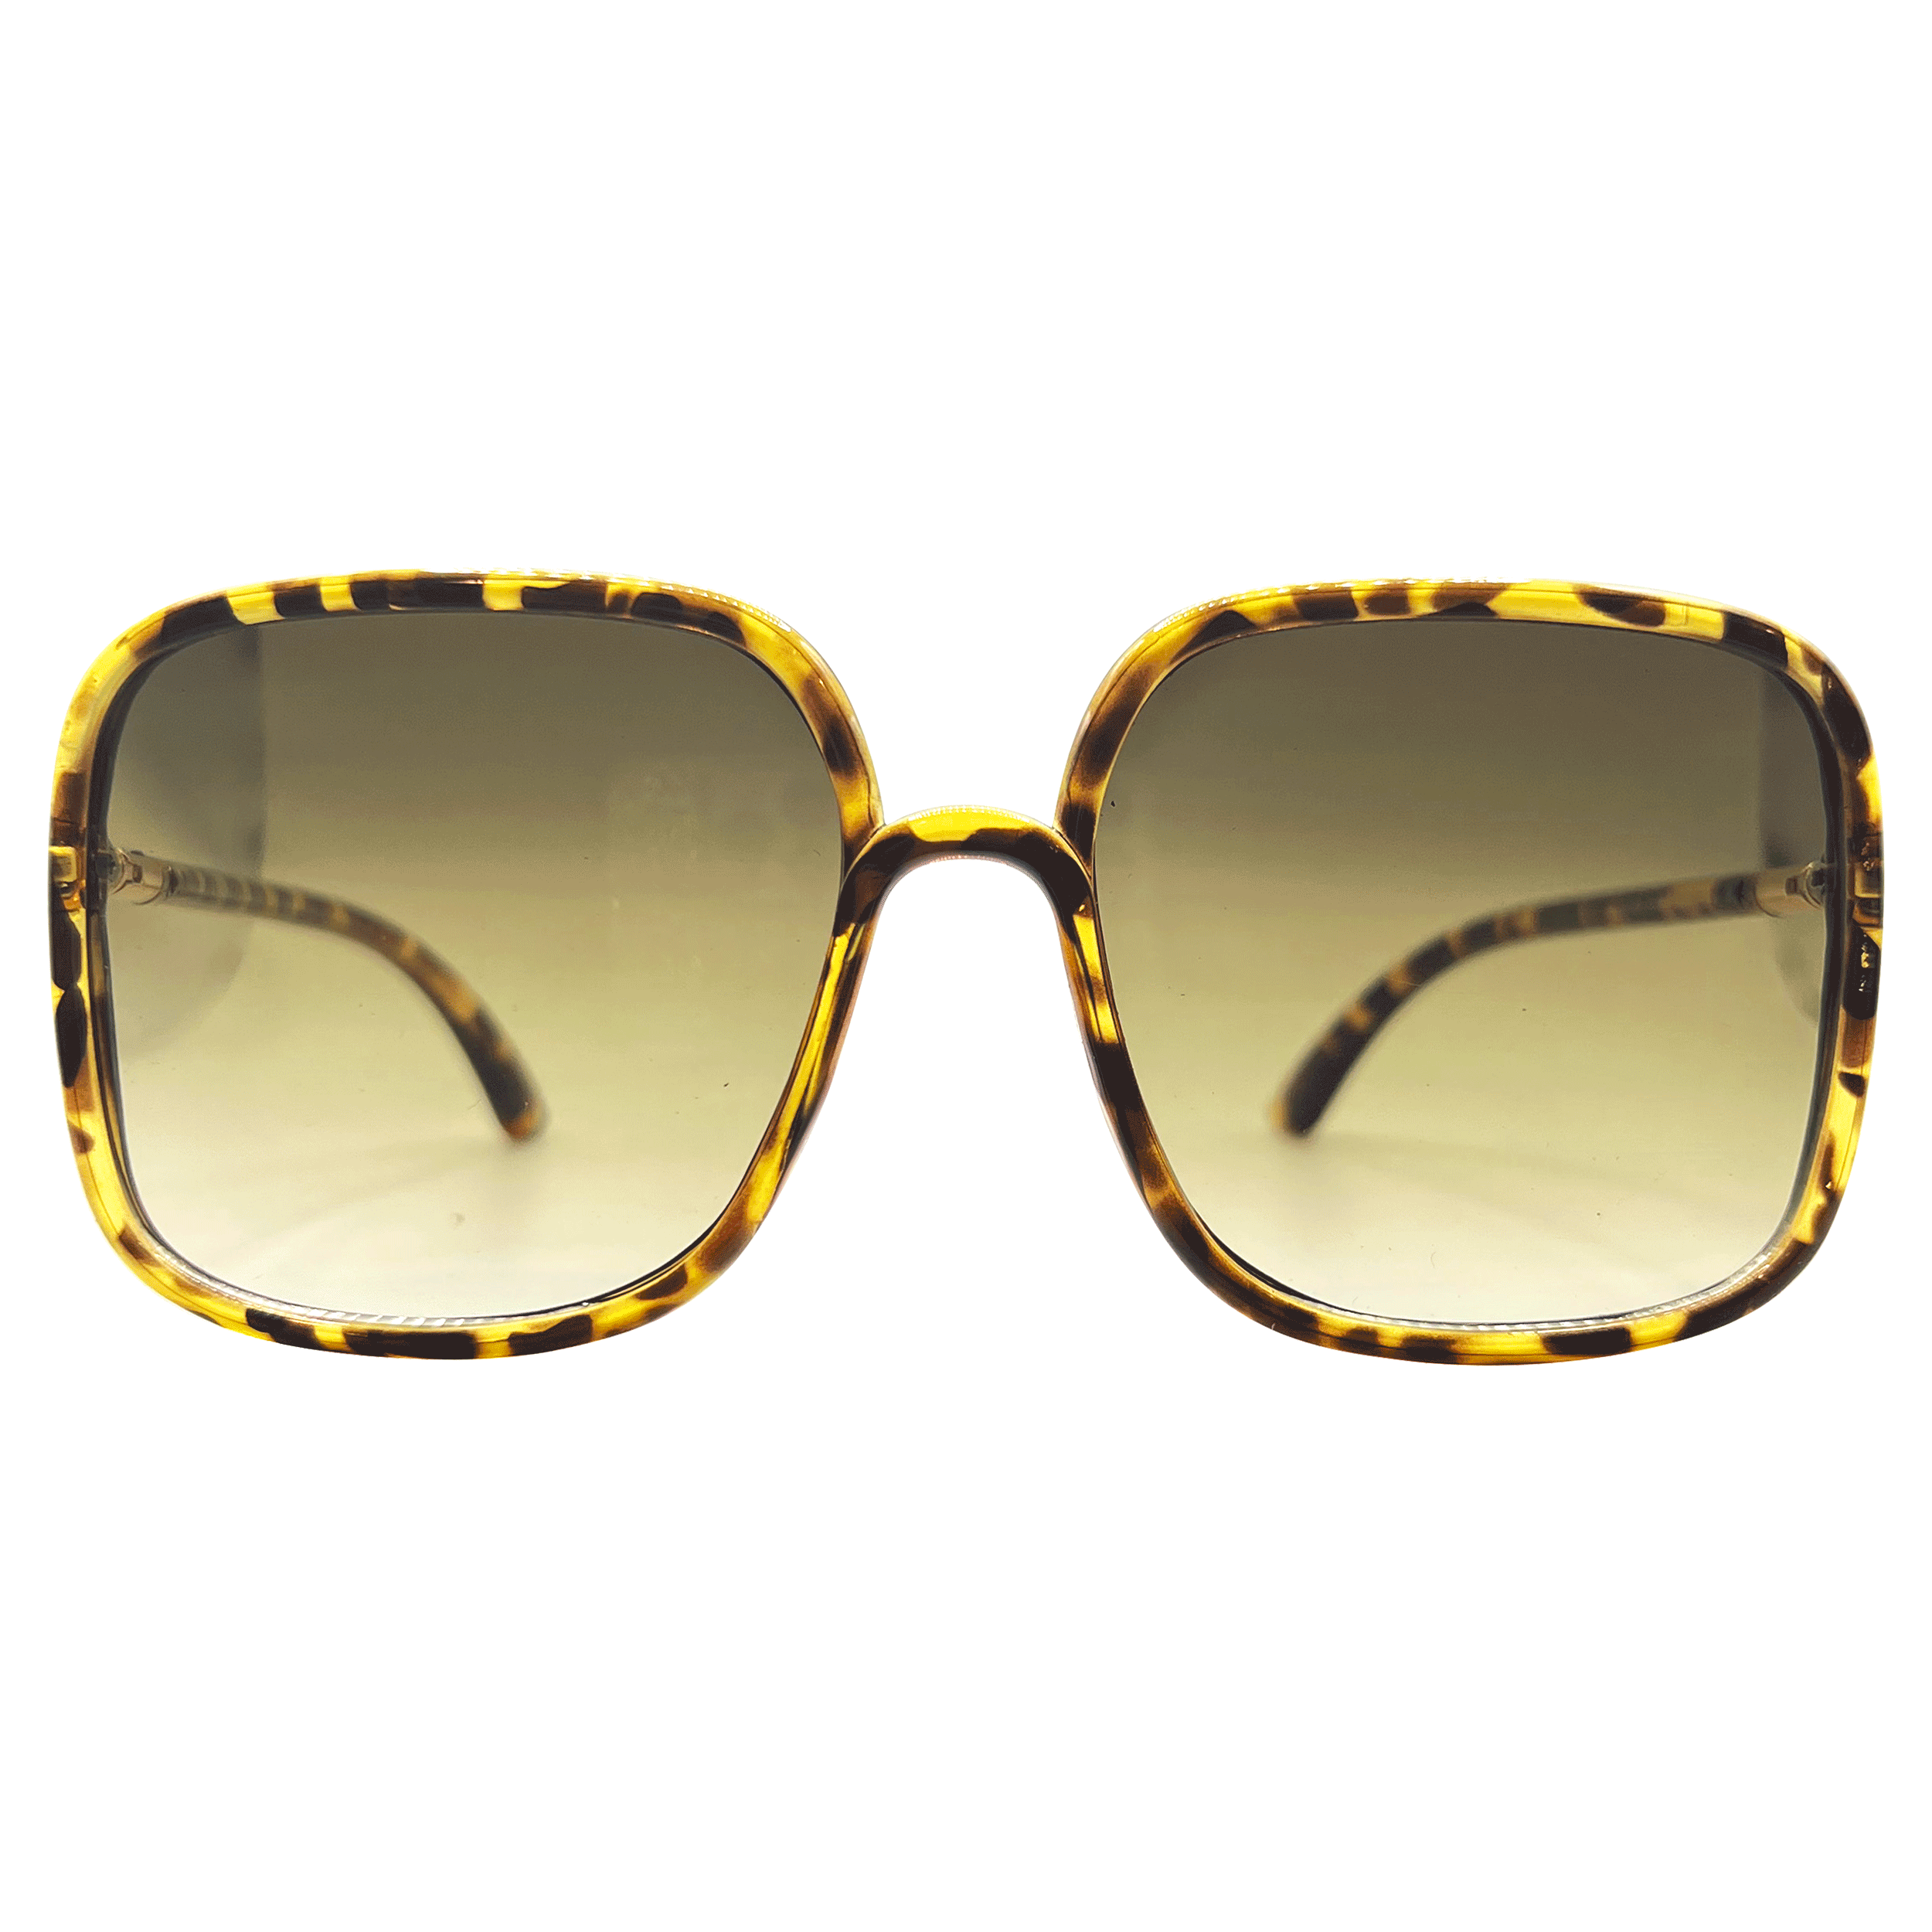 TOP NOTCH 70s Square Sunglasses